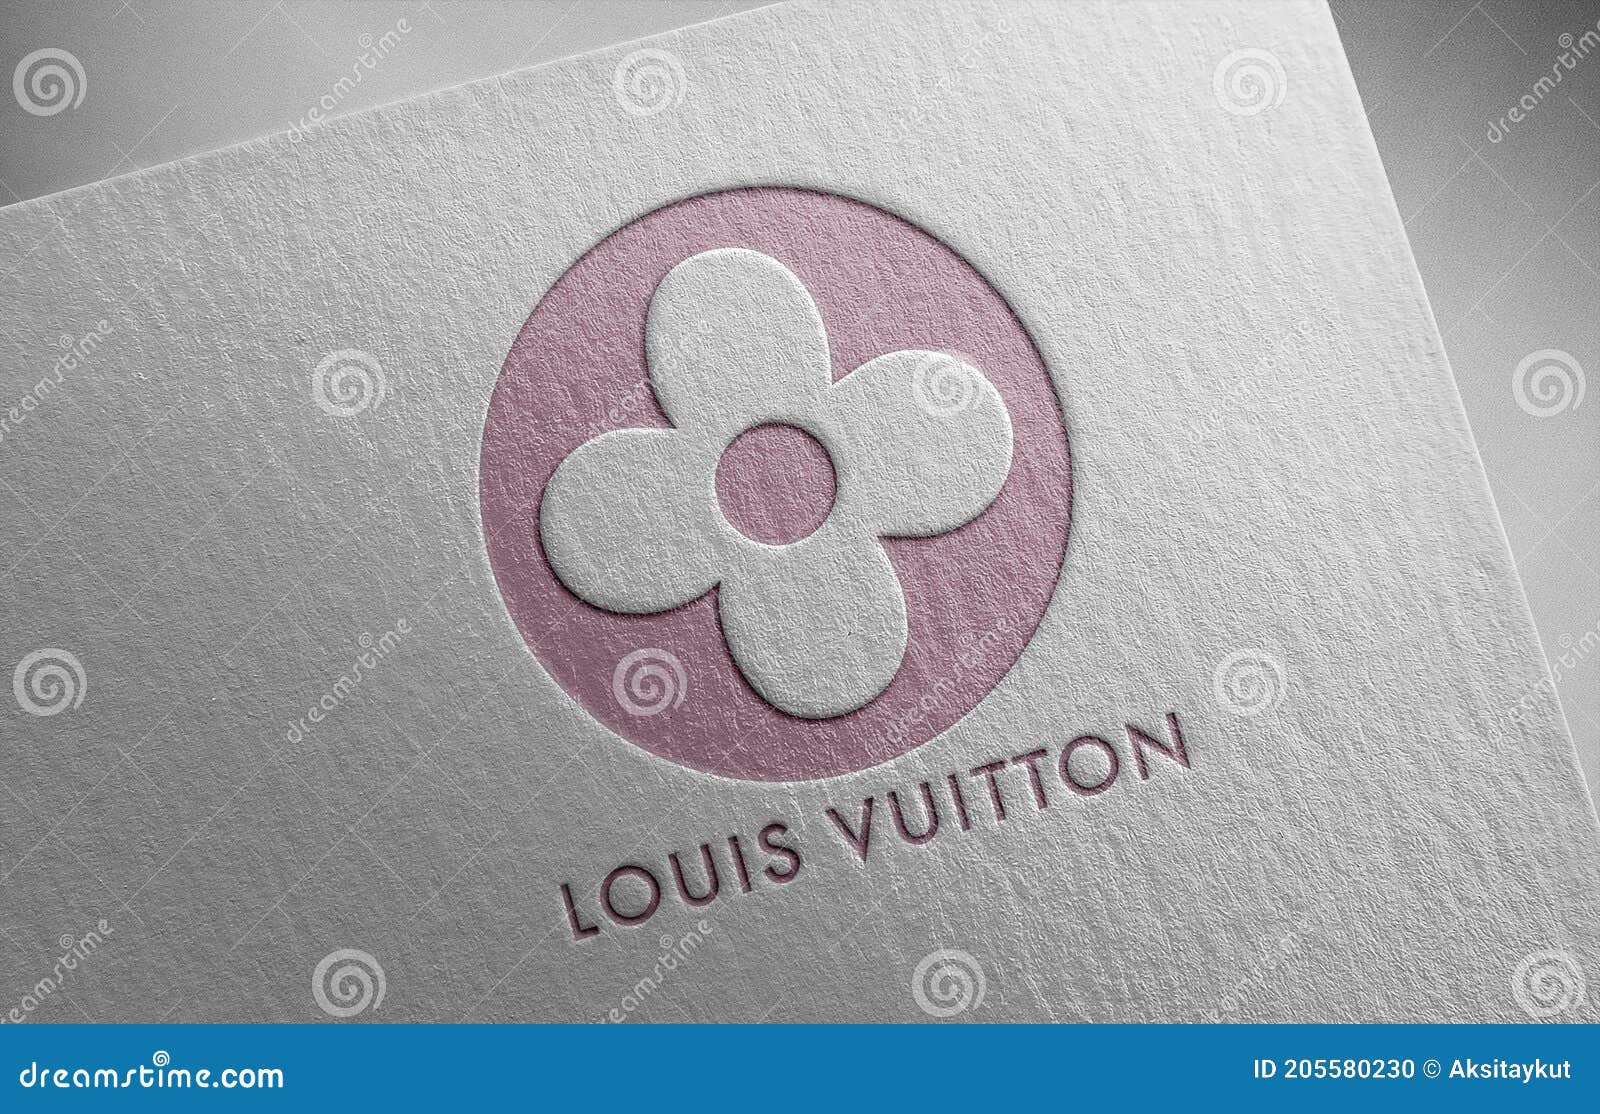 Louis Vuitton Logo Icon Paper Texture Stamp Editorial Image